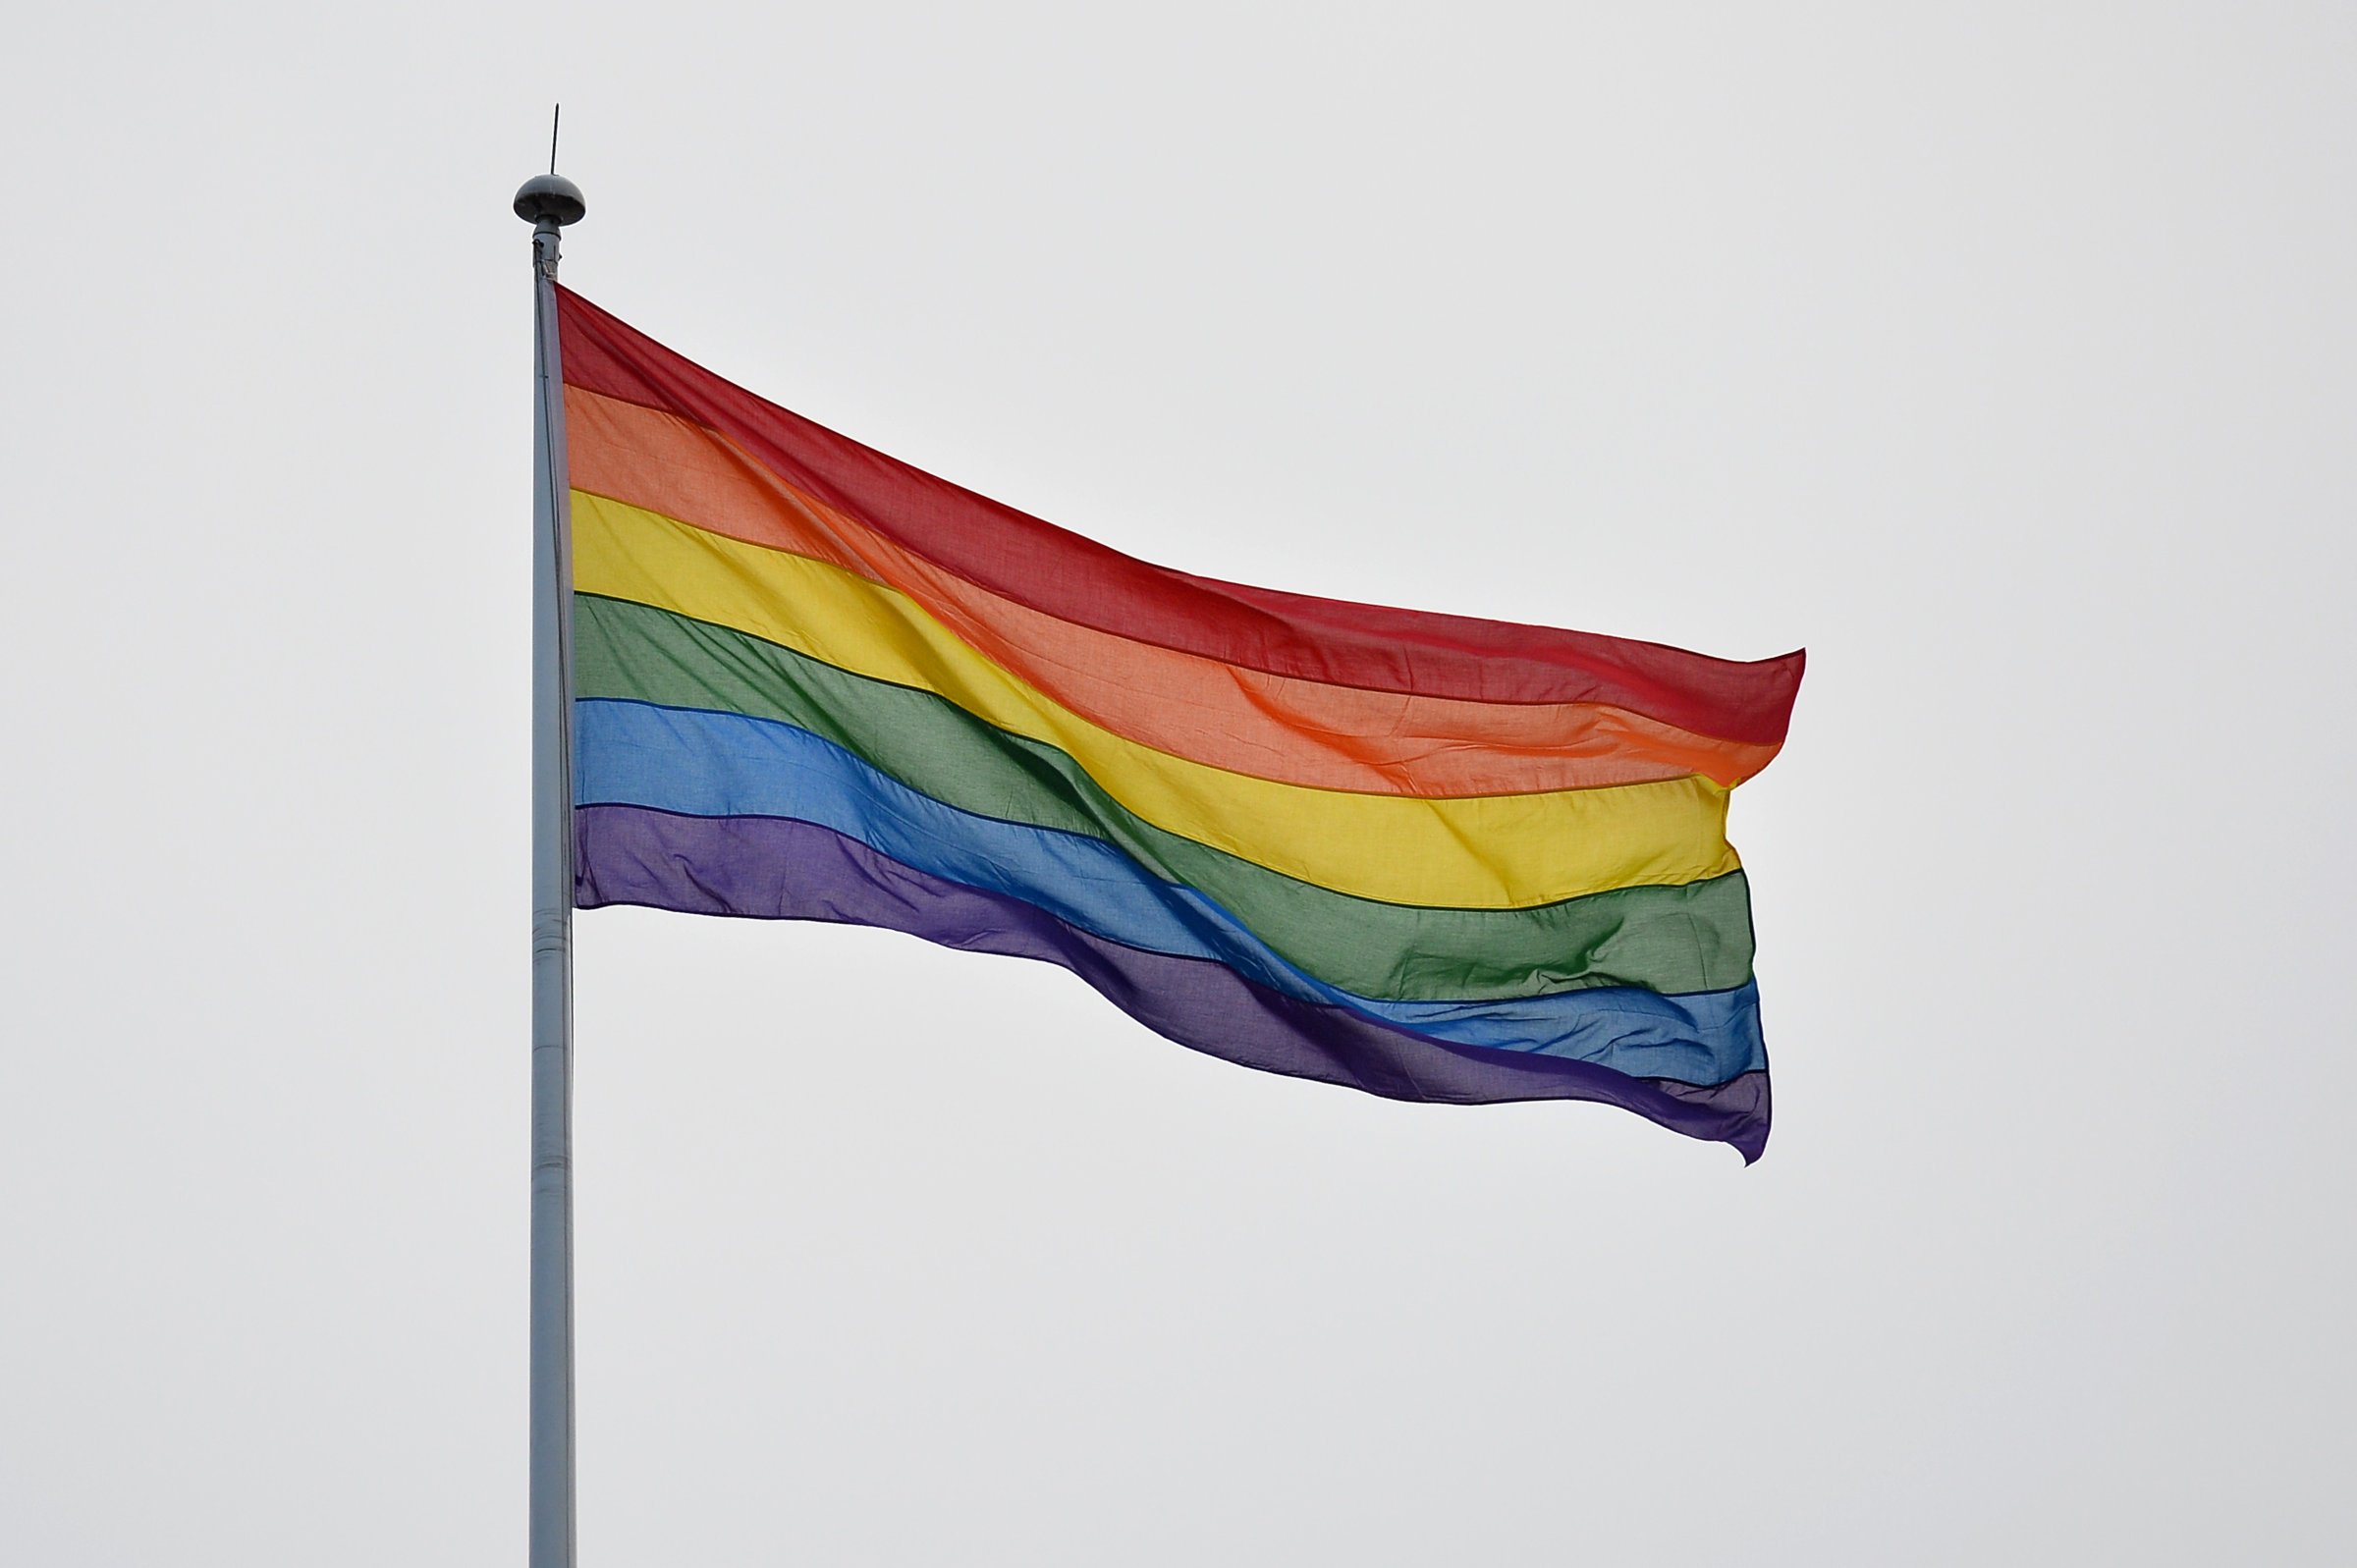 A rainbow gay pride flag flies on Whitehall in central London on Mar. 28, 2014.